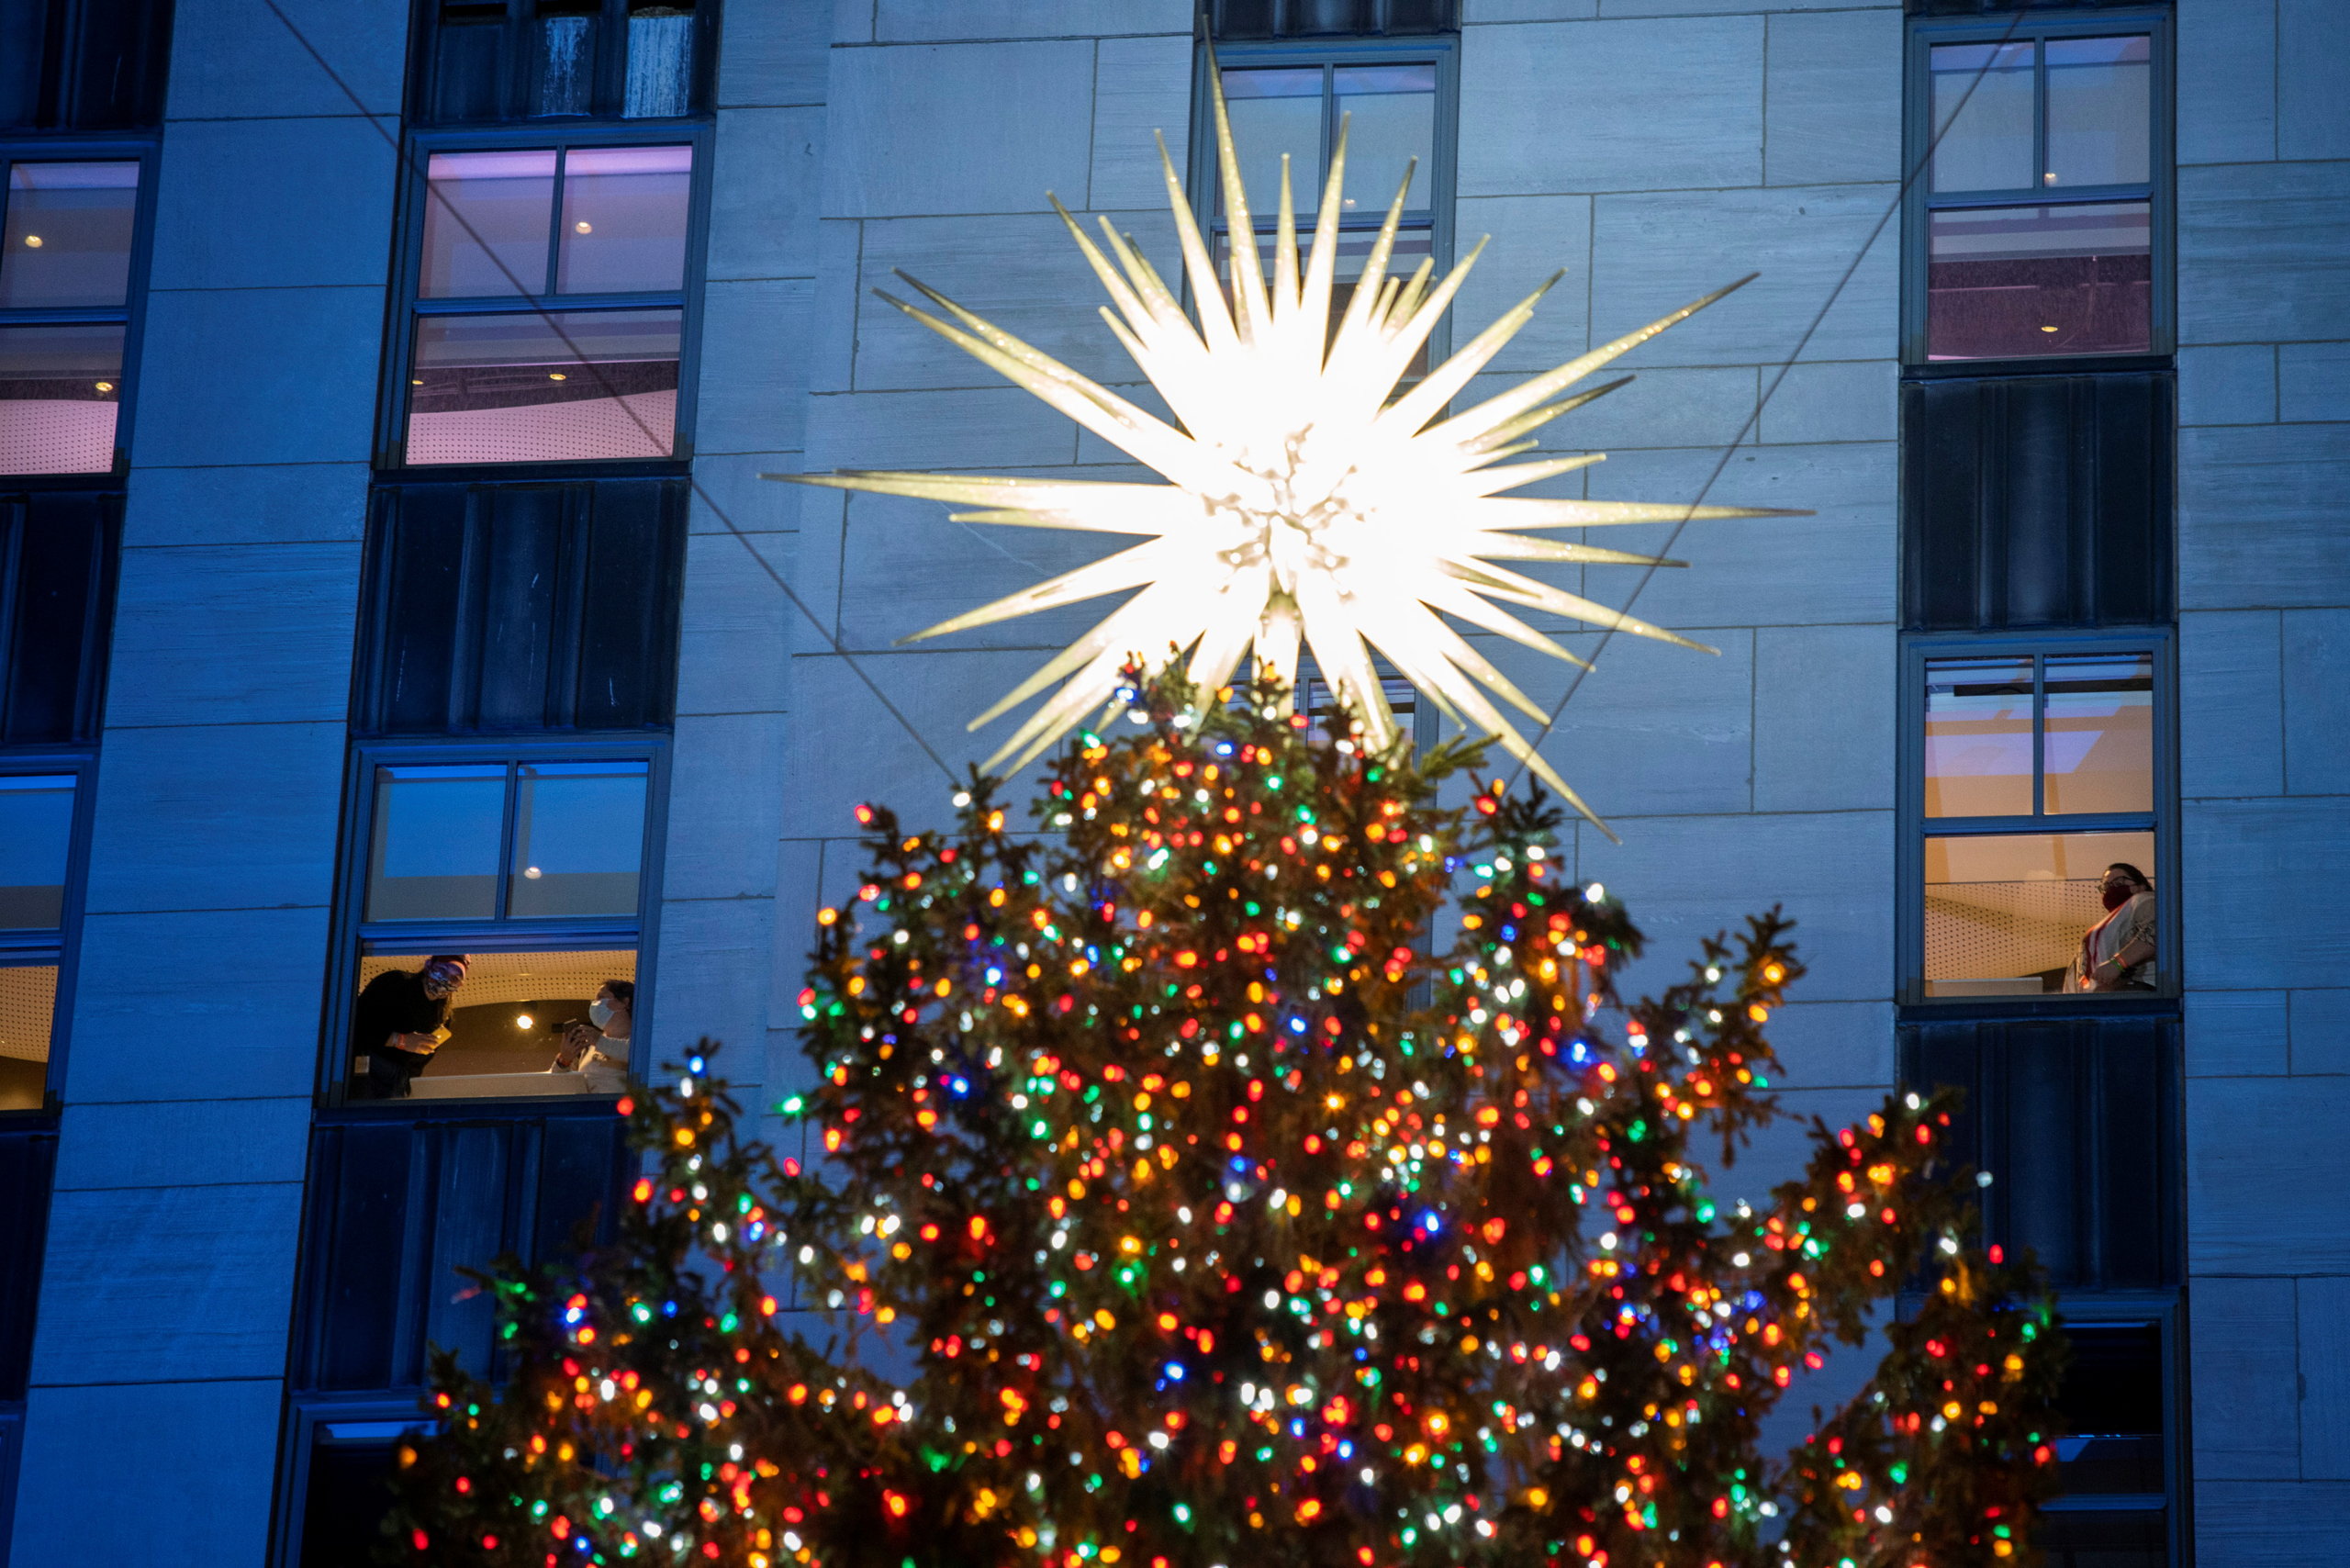 Rockefeller Christmas tree 2021 illuminated